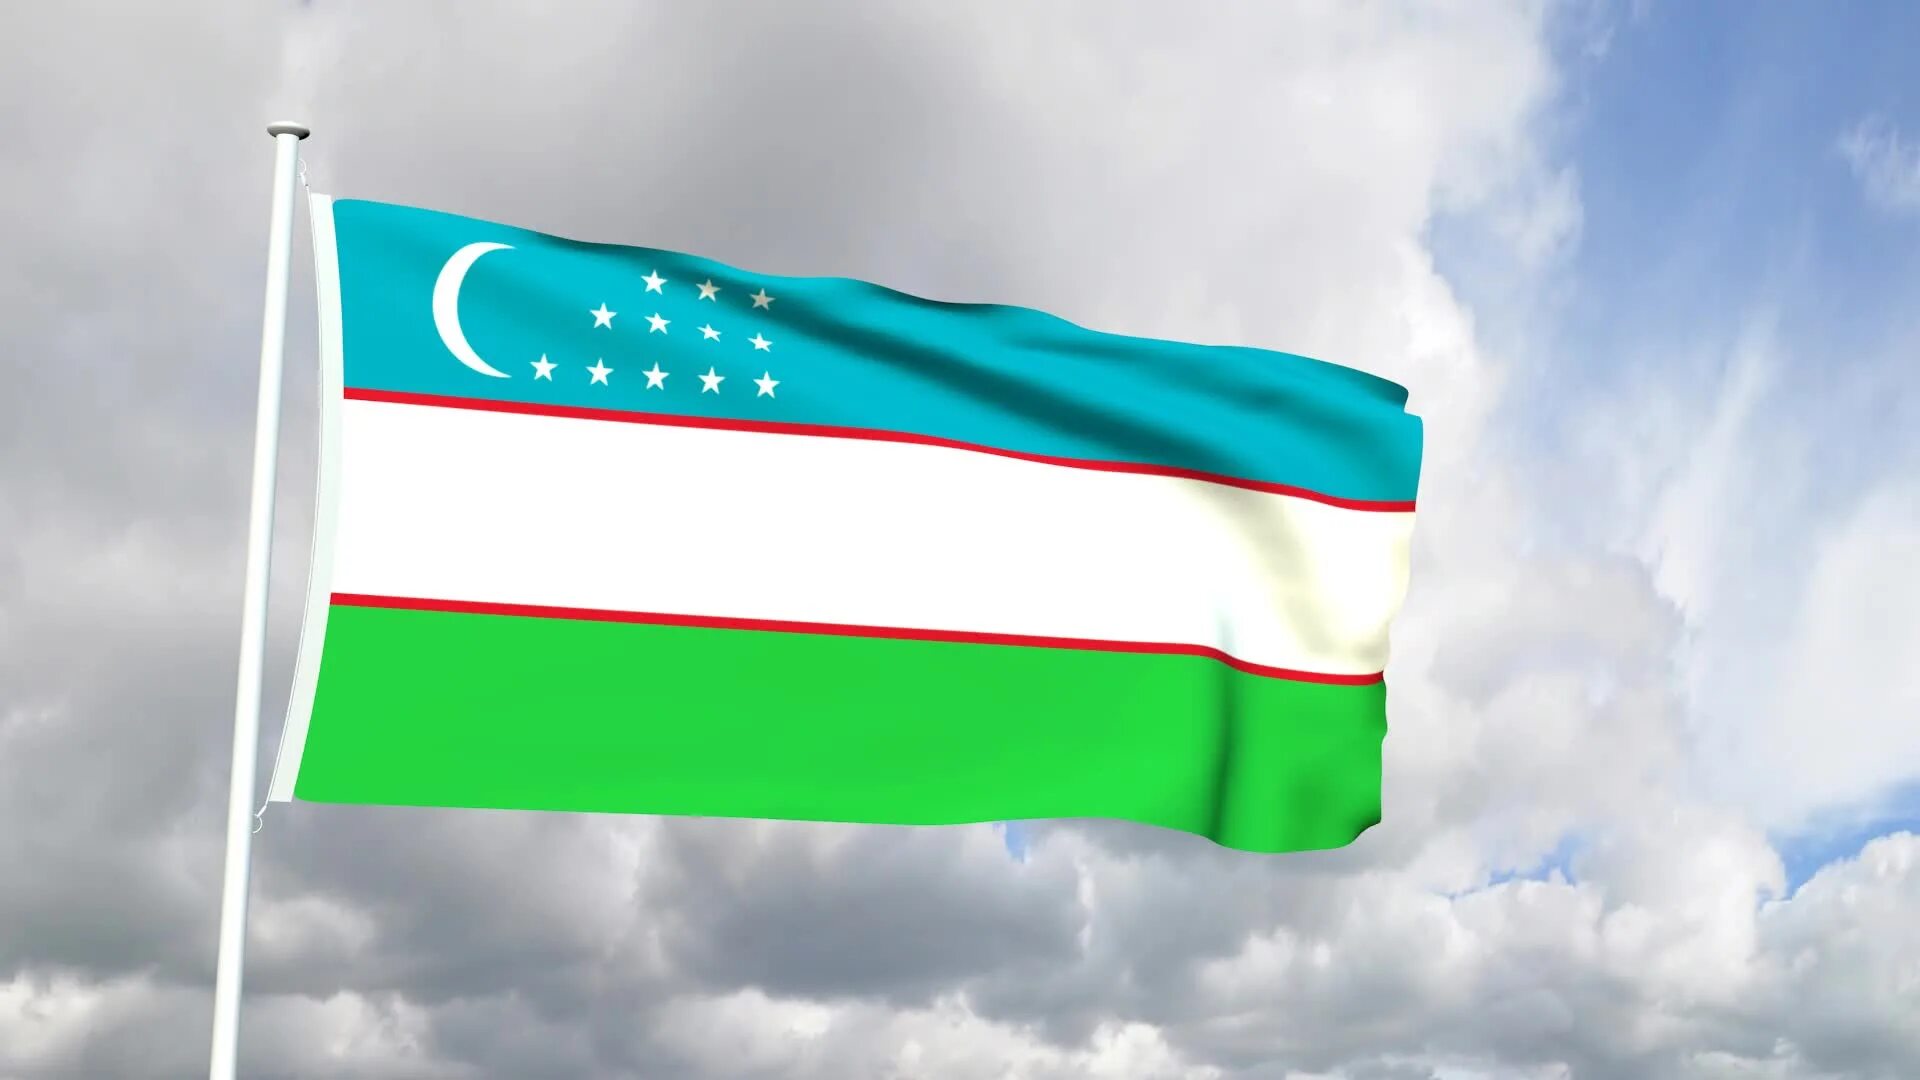 Bayroq rasmi. Флаг Узбекистана. Флаг Респ Узбекистан. Флаг Республики Узбекистан Штандарт. Узбекистан флаг Узбекистана.